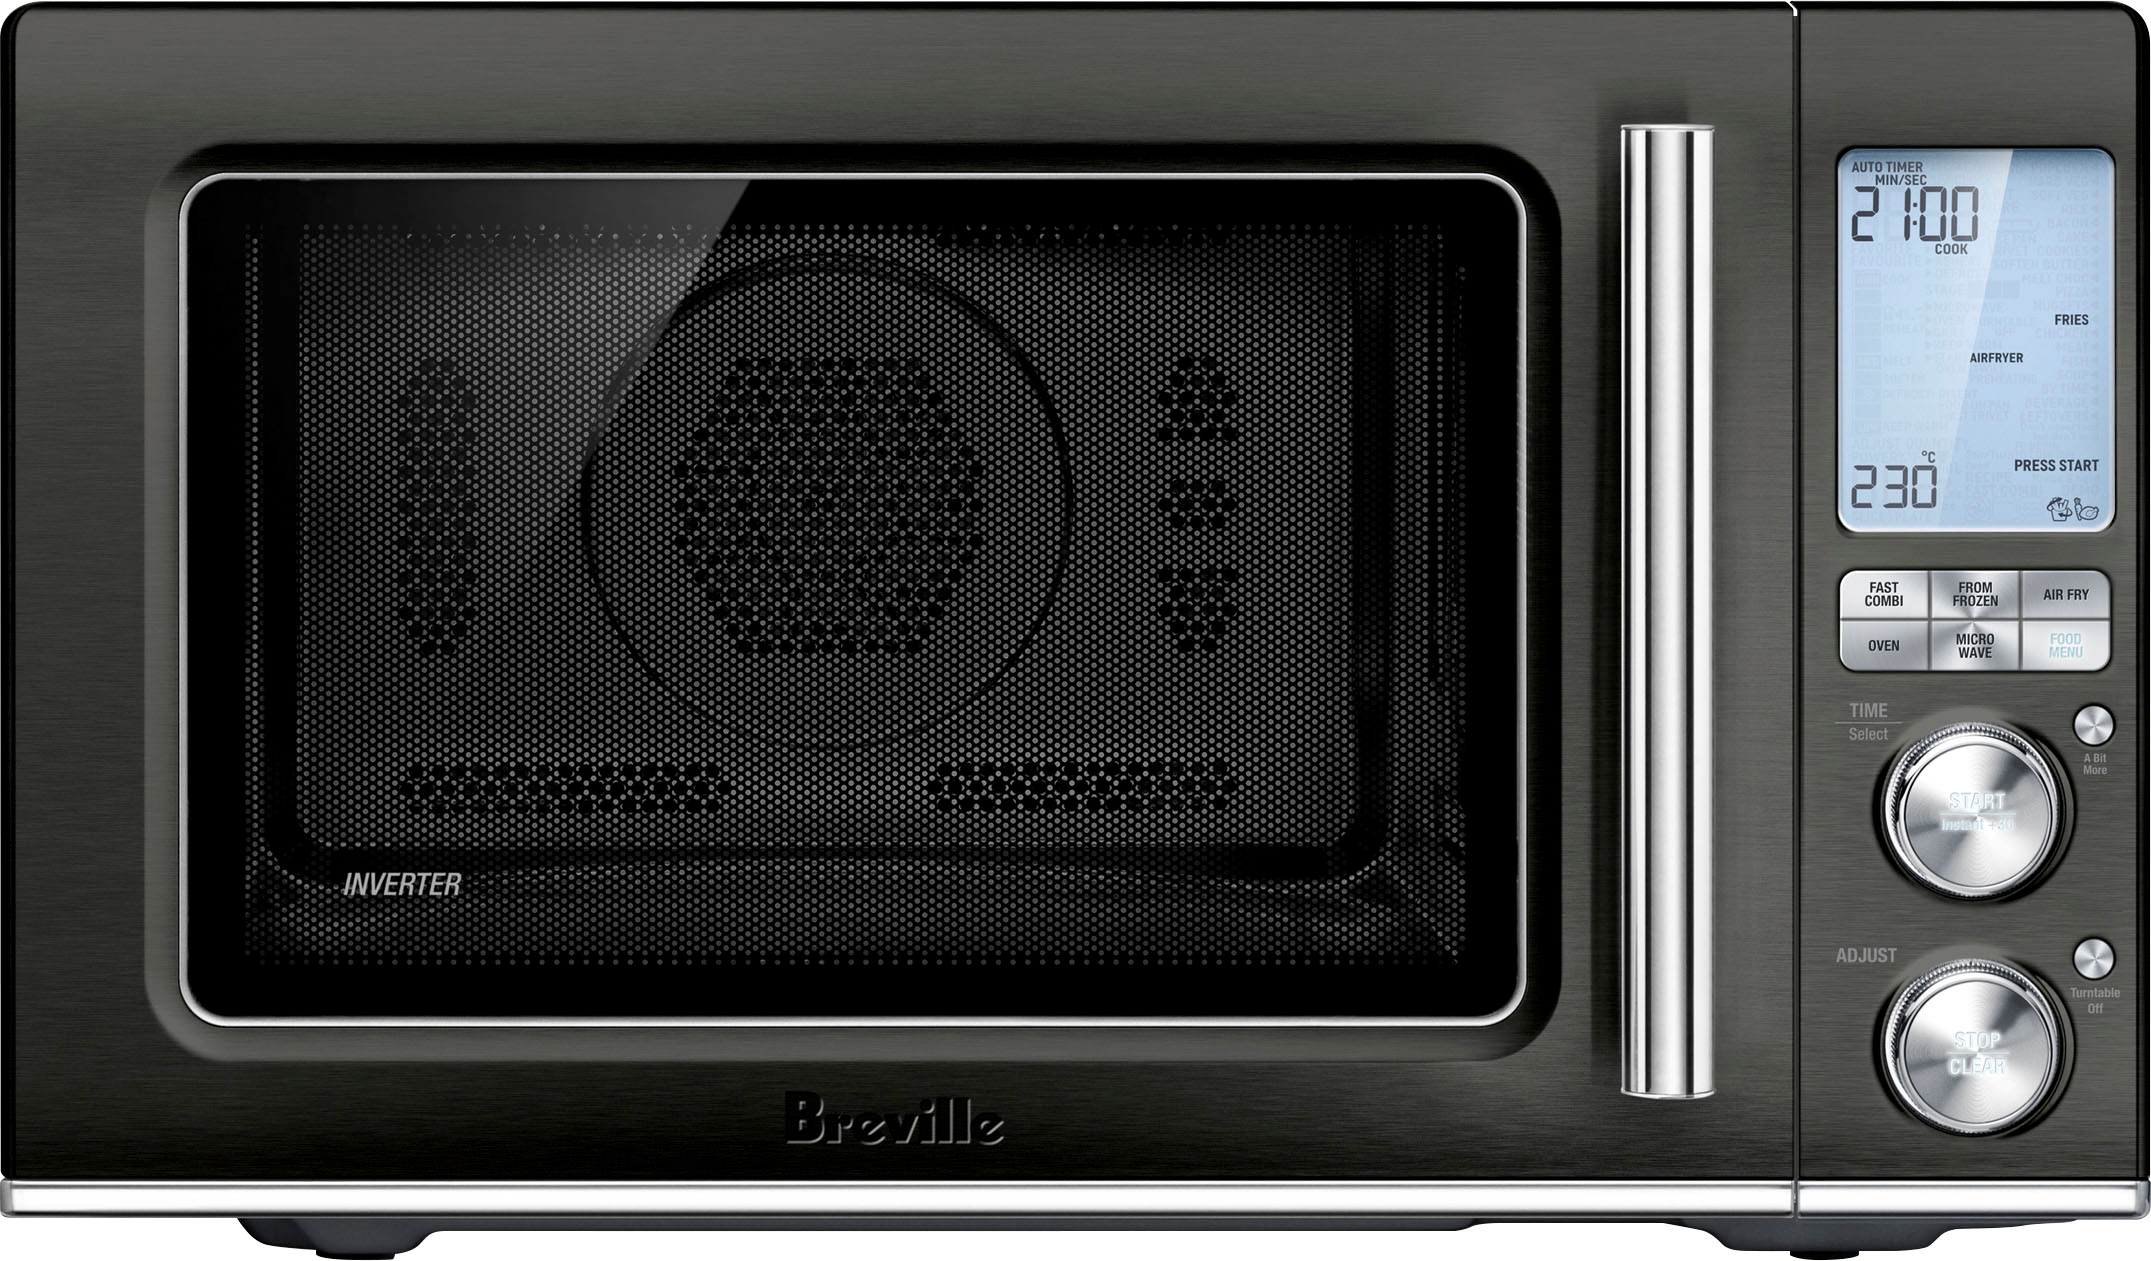 Microwave Air Fryer Combo - Best Buy